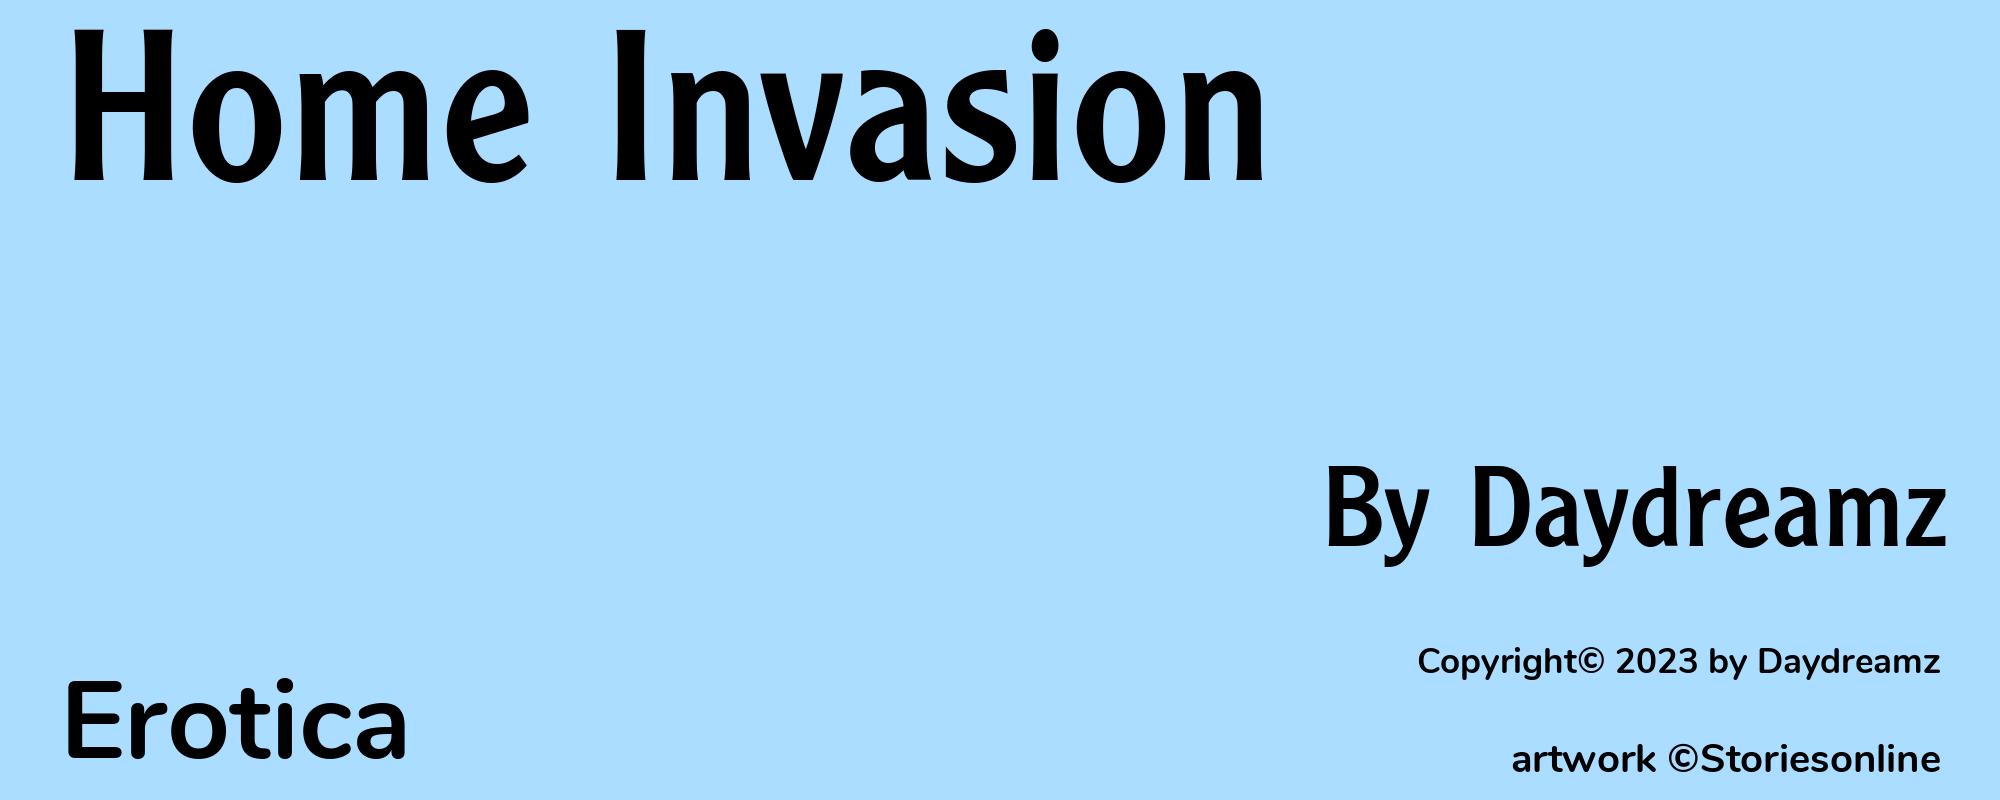 Home Invasion - Cover